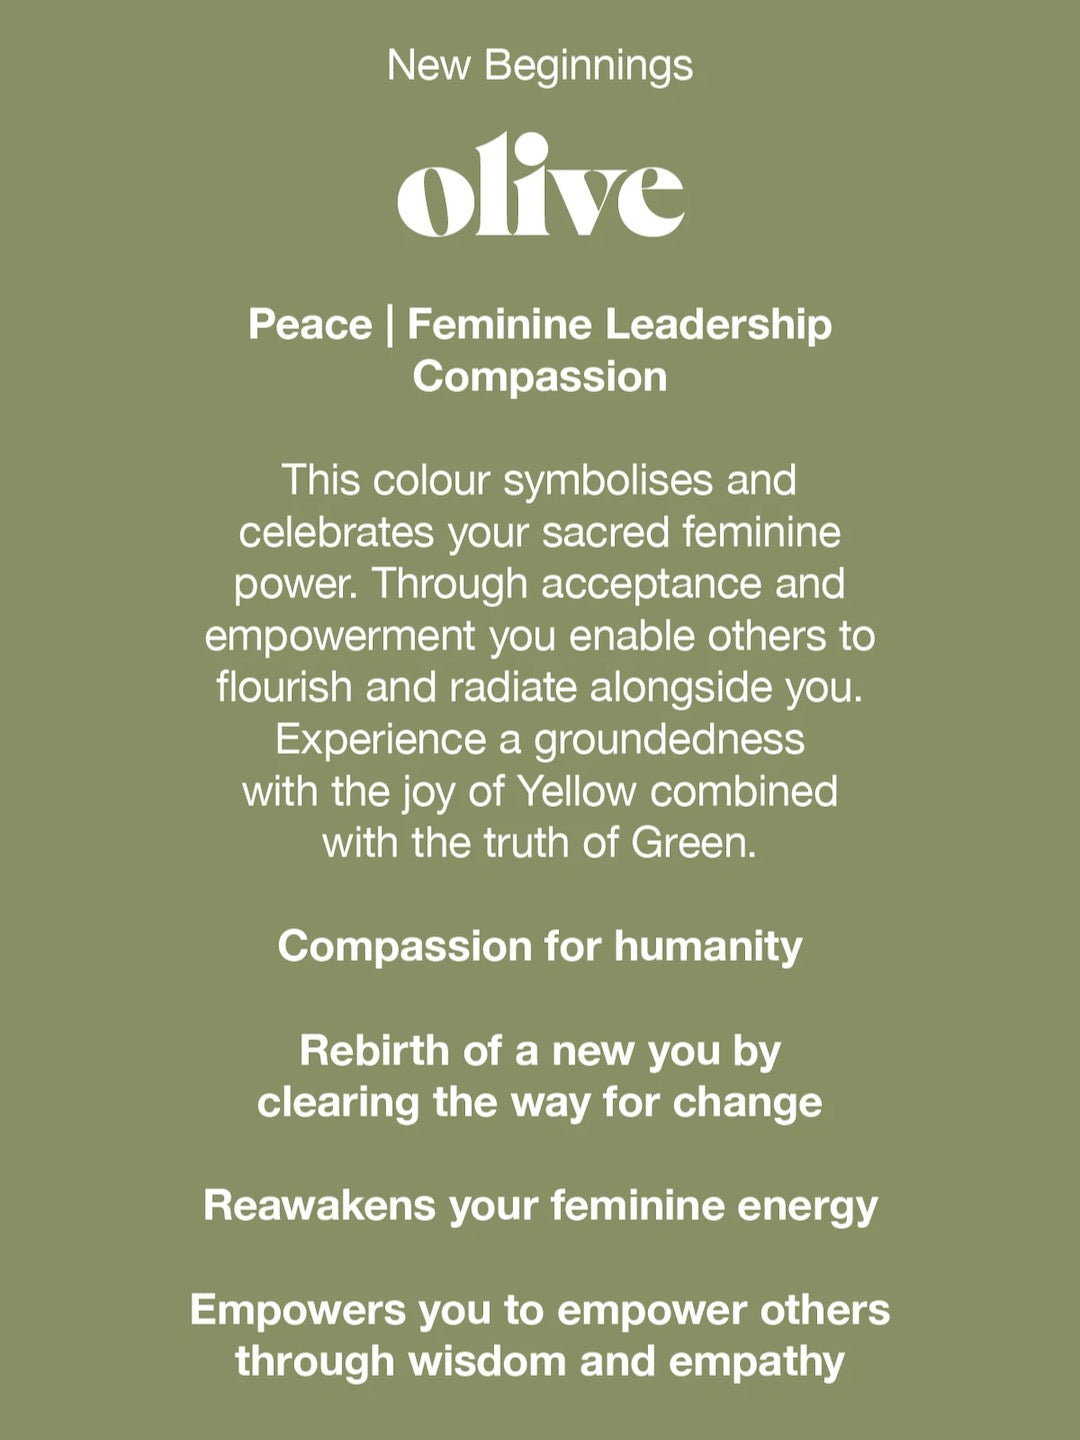 Peace feminine leadership compassion becomes the Angela Bra - Olive by Videris.